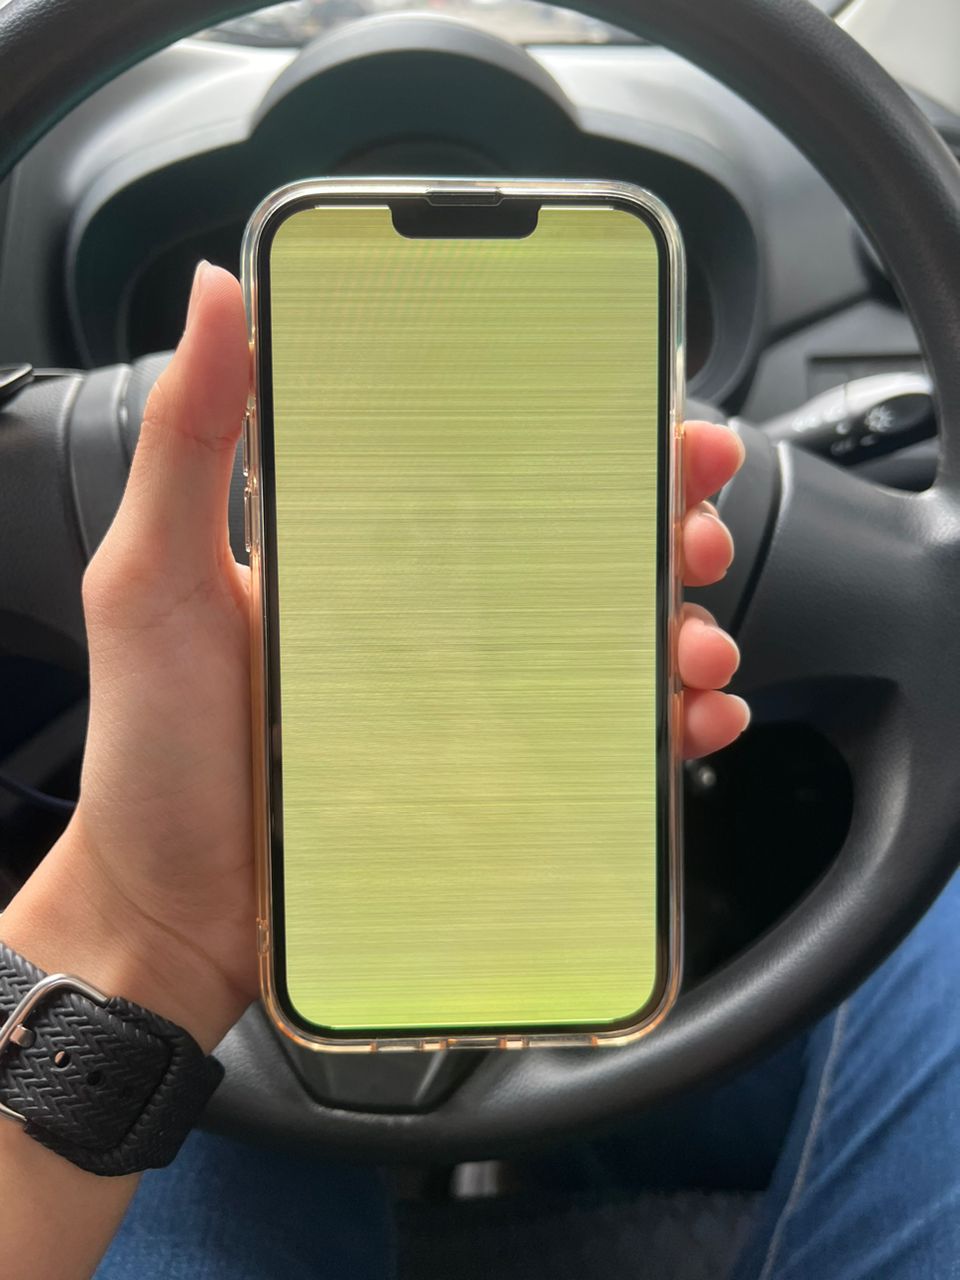 Is iPhone 13 screen yellowish?